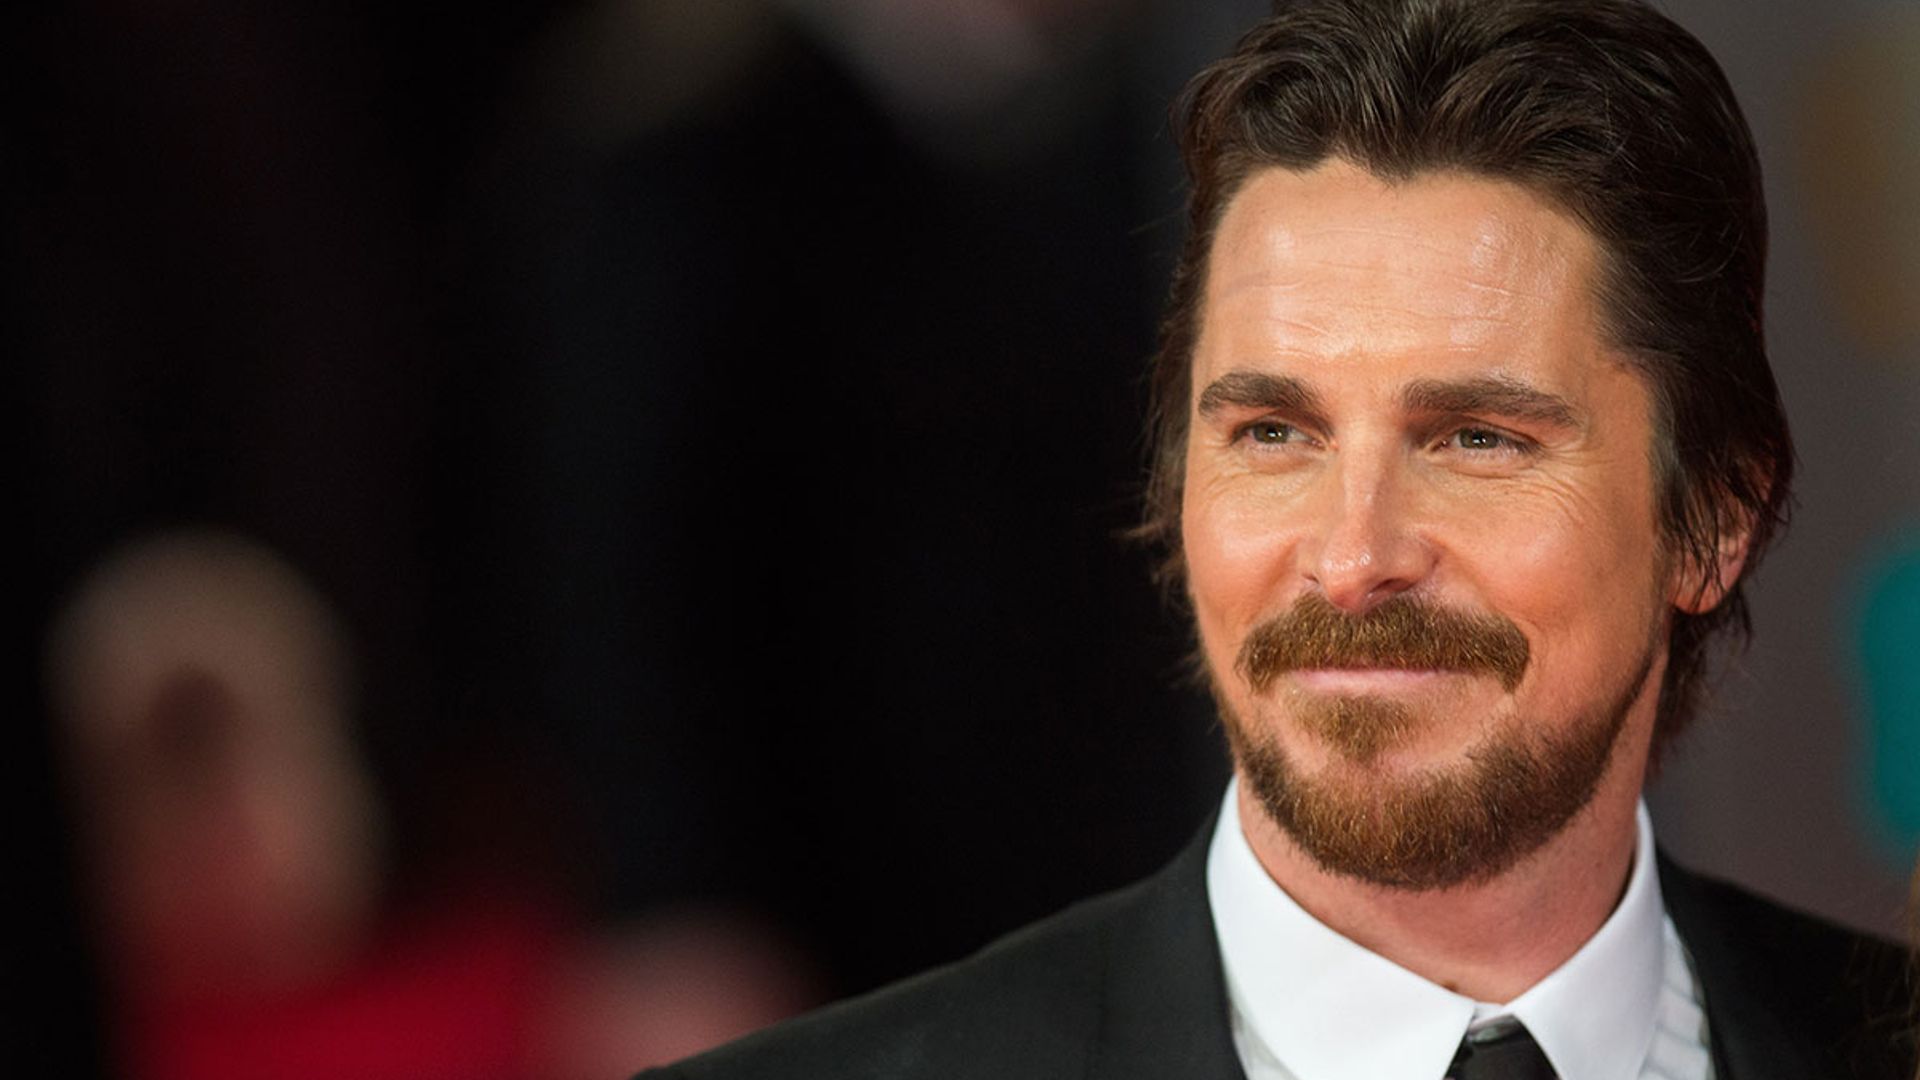 Christian Bale's most famous film roles